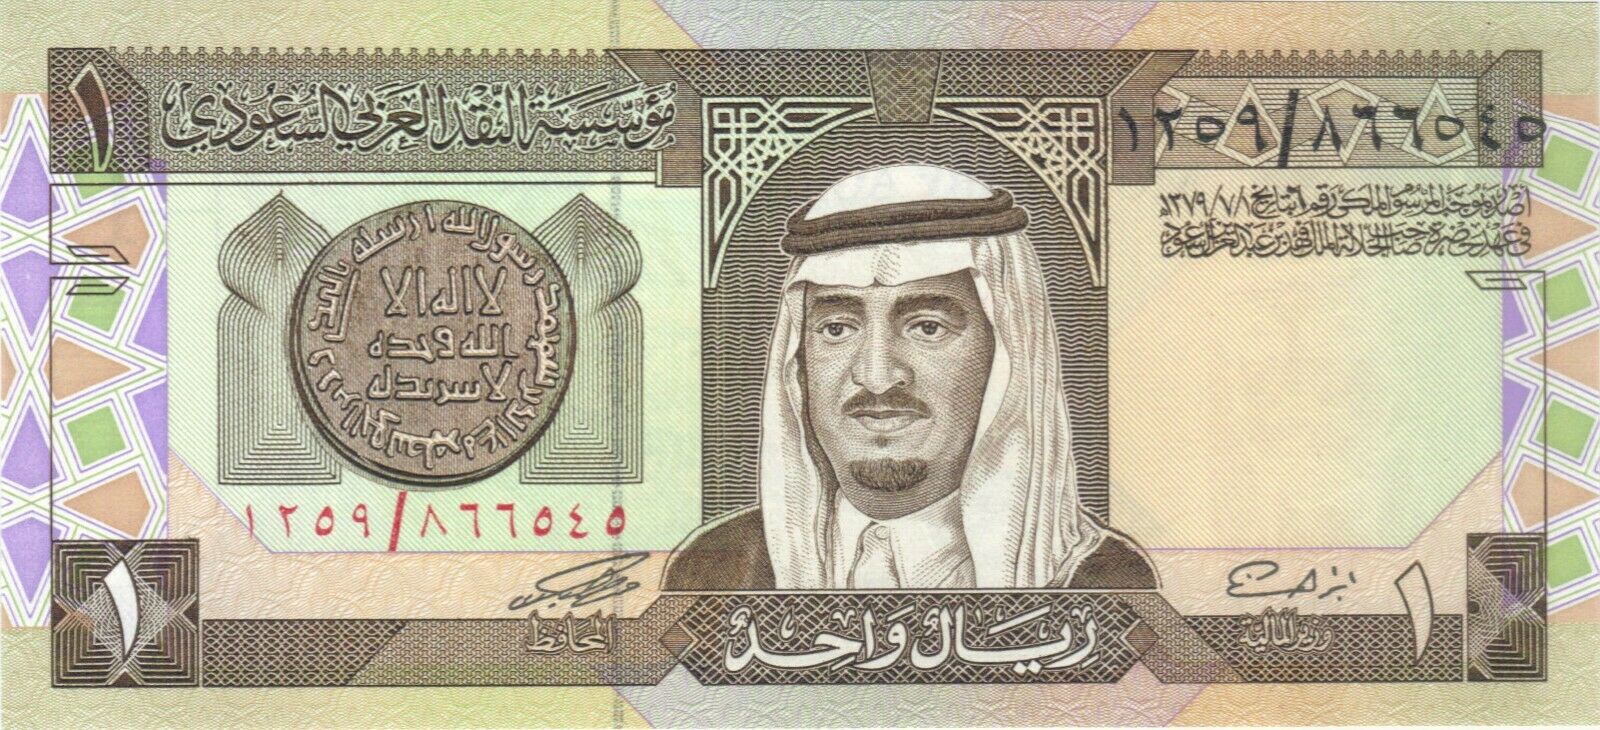 1984 1 ONE RIYAL SAUDI ARABIAN CURRENCY UNC BANKNOTE NOTE MONEY BANK BILL CASH